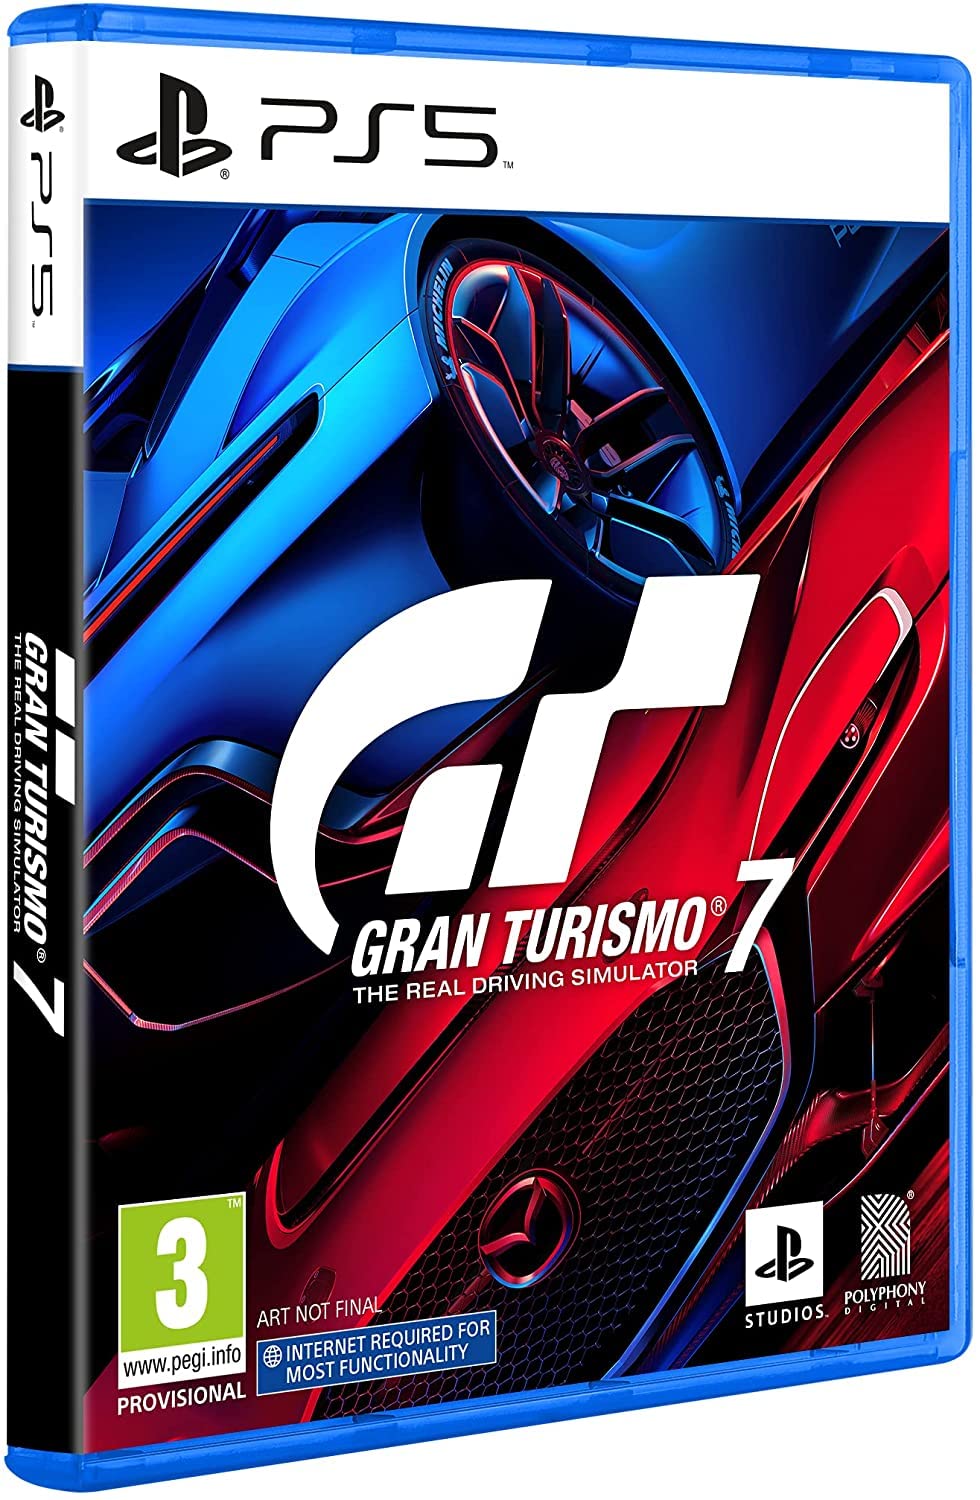 escompte élevé Gran Turismo 7 KLyKSrLsS en ligne